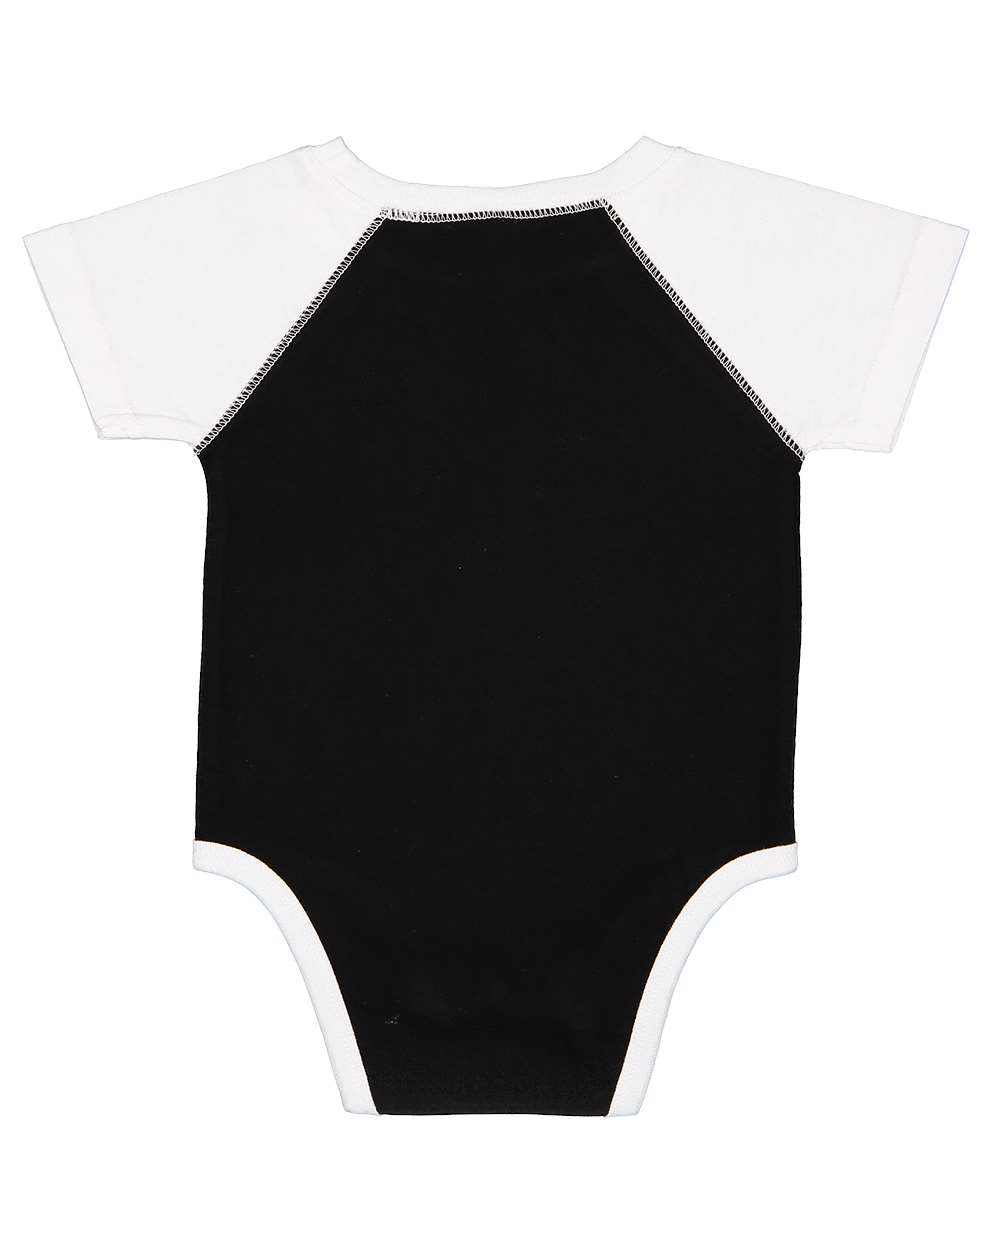 Rabbit Skins 4424 Infant Fine Jersey Bodysuit - Hot Pink - 18M